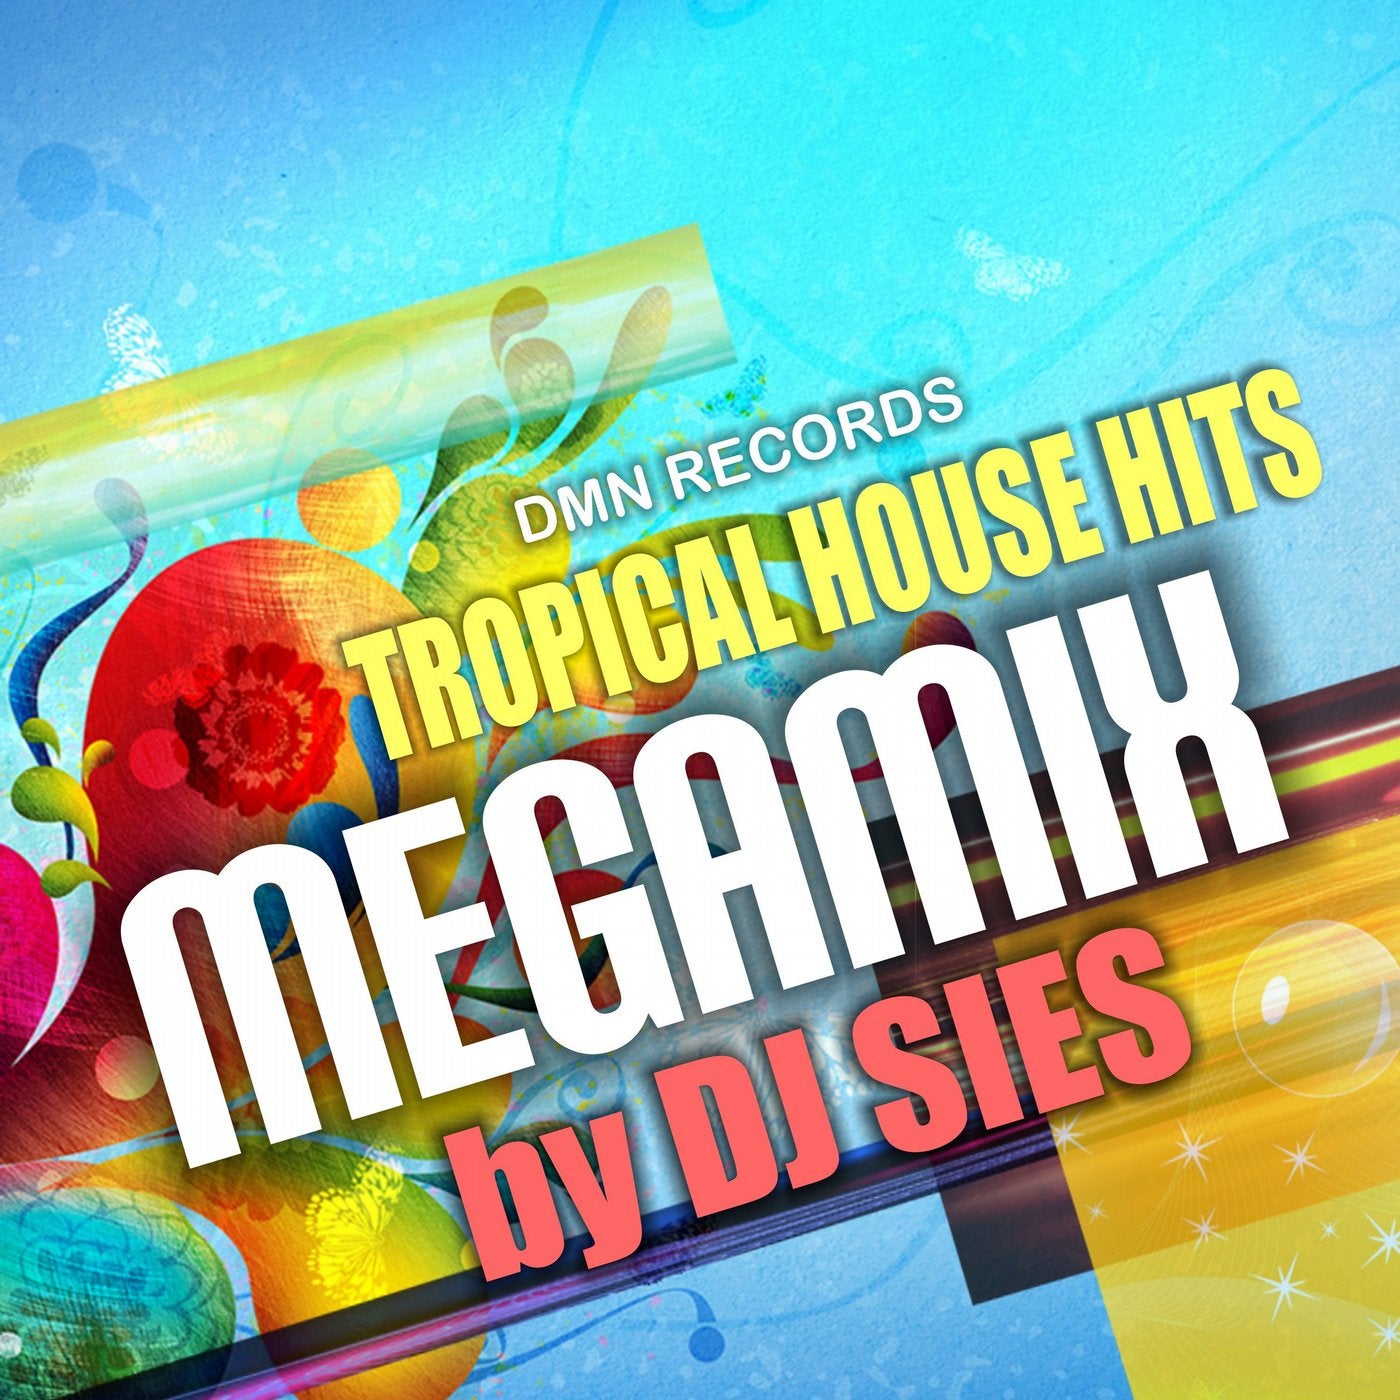 Record House Hits. Tropical Hits. Tropic House Mix. House hits mix